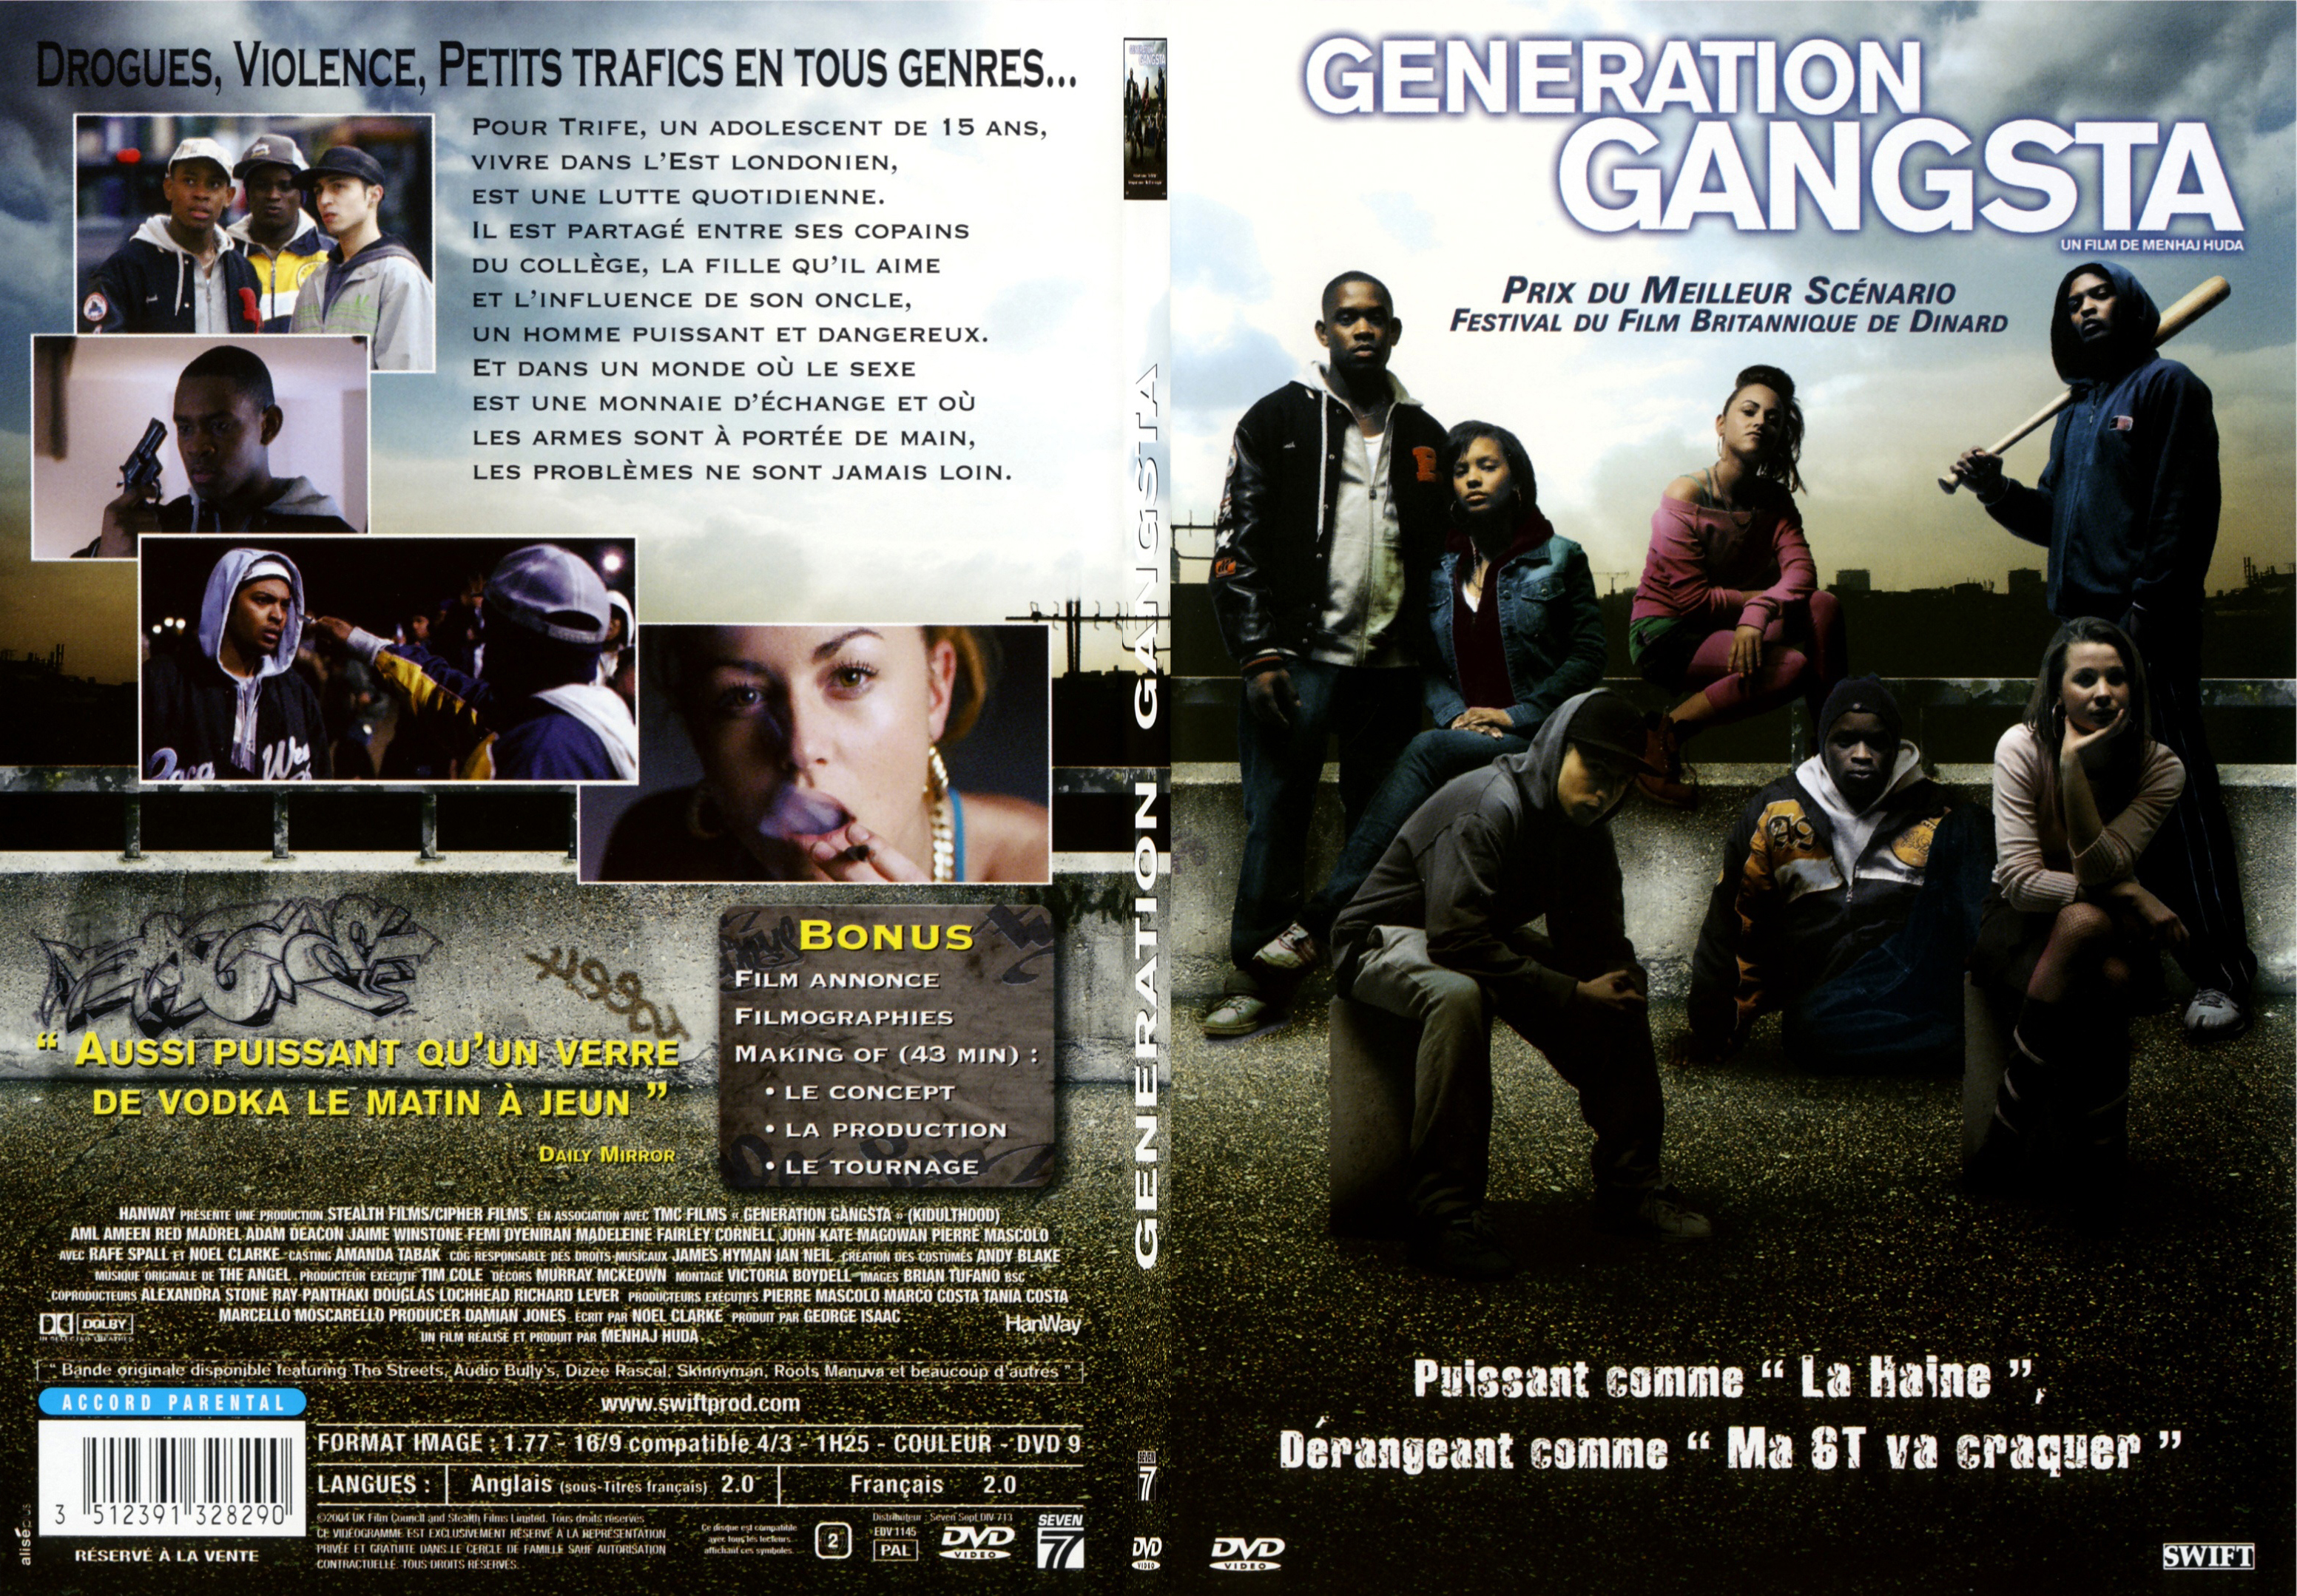 Jaquette DVD Generation gangsta - SLIM